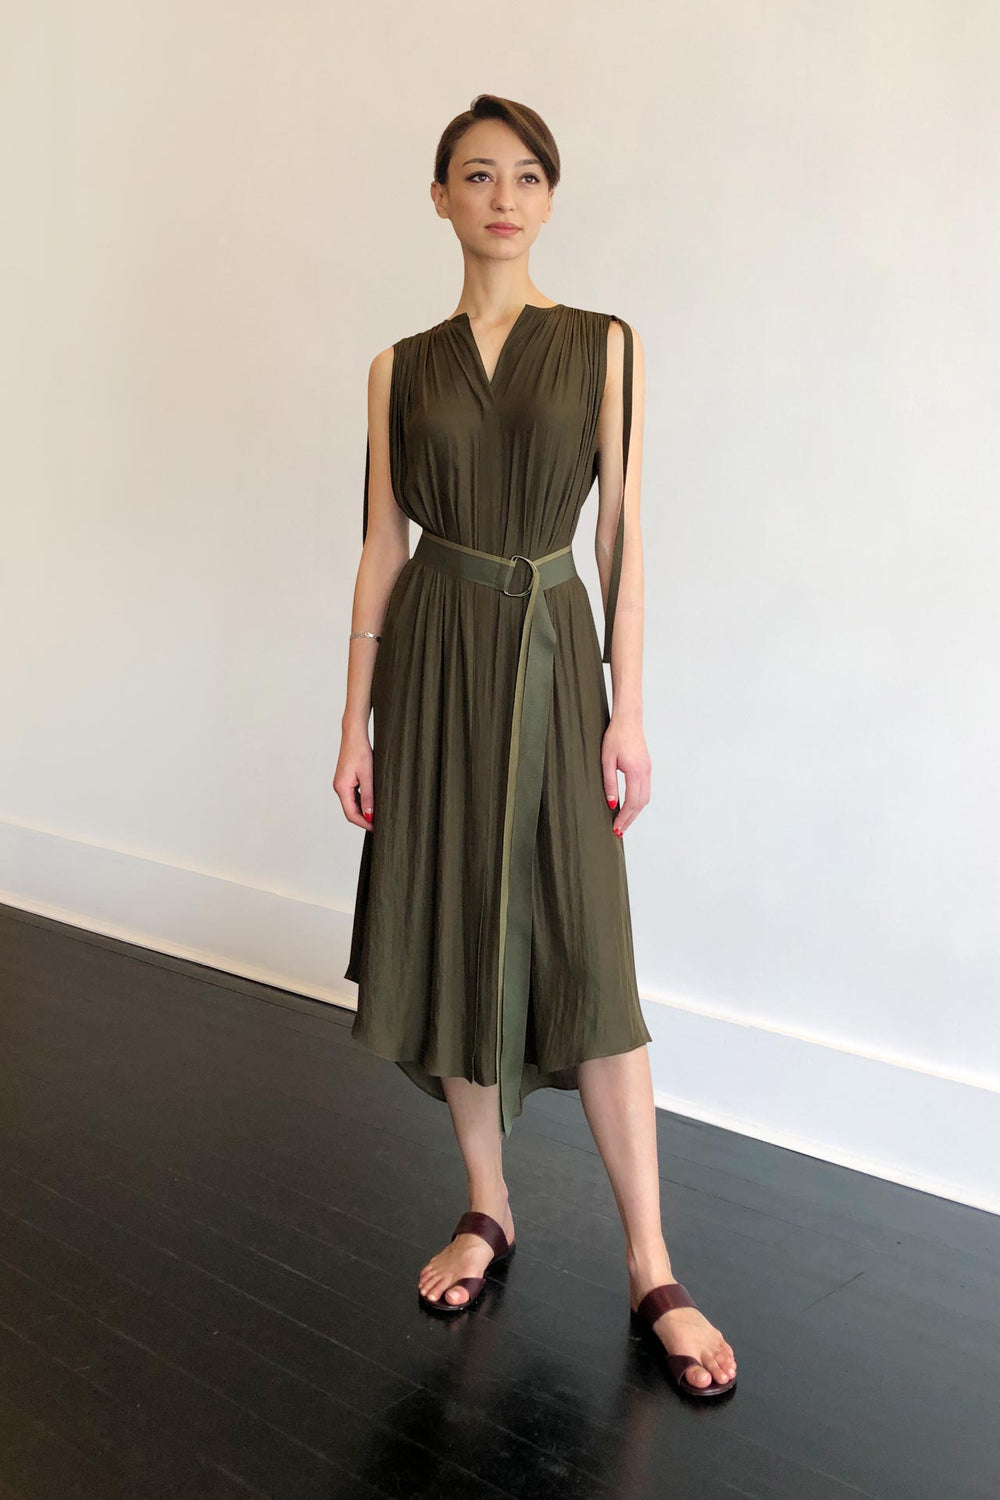 Fashion Designer CARL KAPP collection | Patatran Onesize Fits All cocktail dress Khaki | Sydney Australia